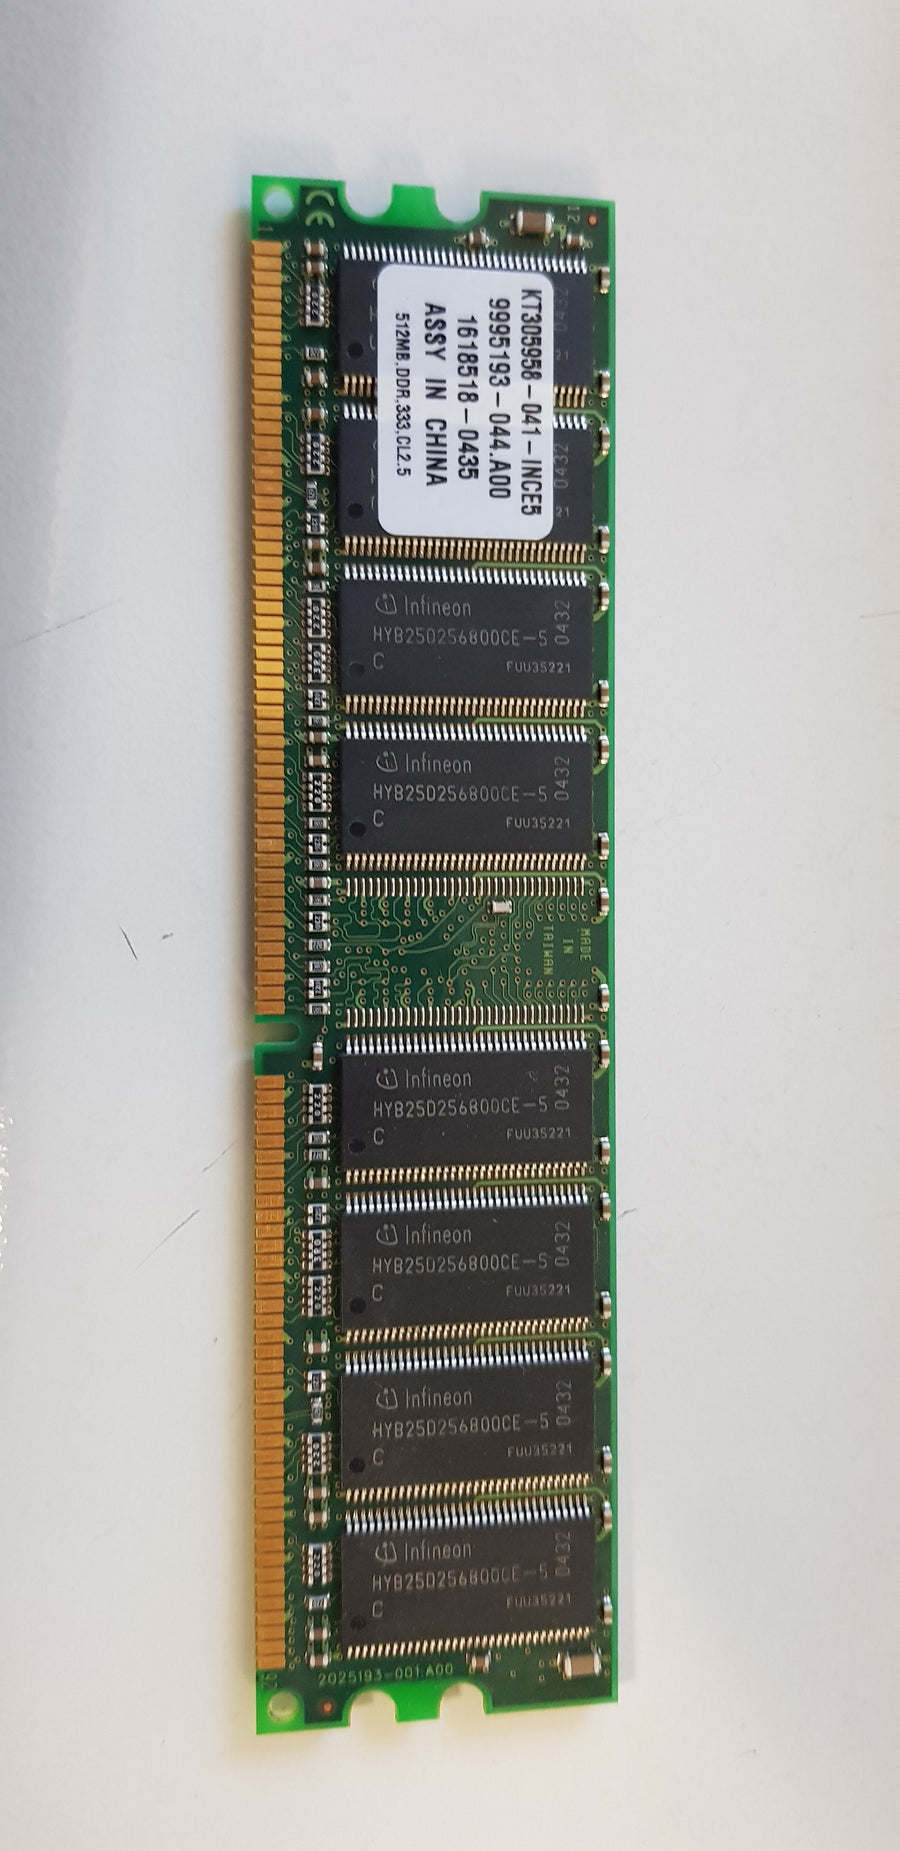 Kingston/HP 128MB PC2700 333MHz Desktop DDR Memory (KT305956-041-INCE5 305958-041)